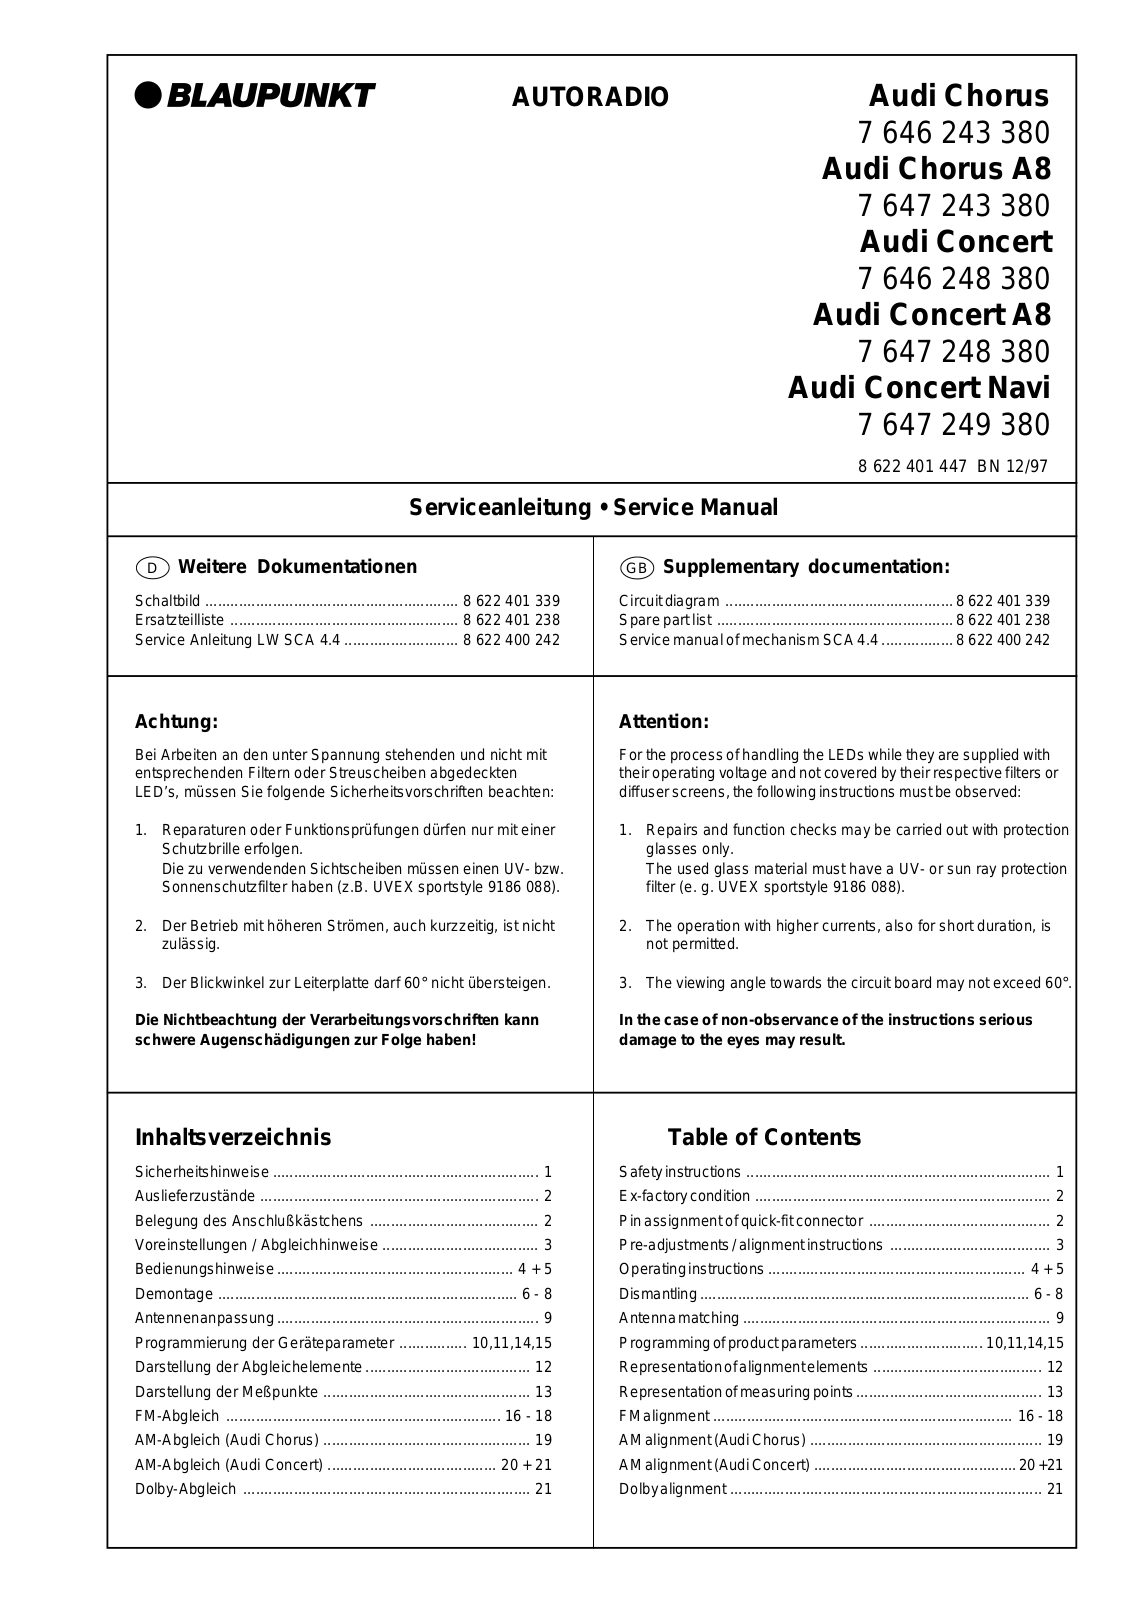 Blaupunkt Audi Chorus 7, Audi Concert 7 Service Manual